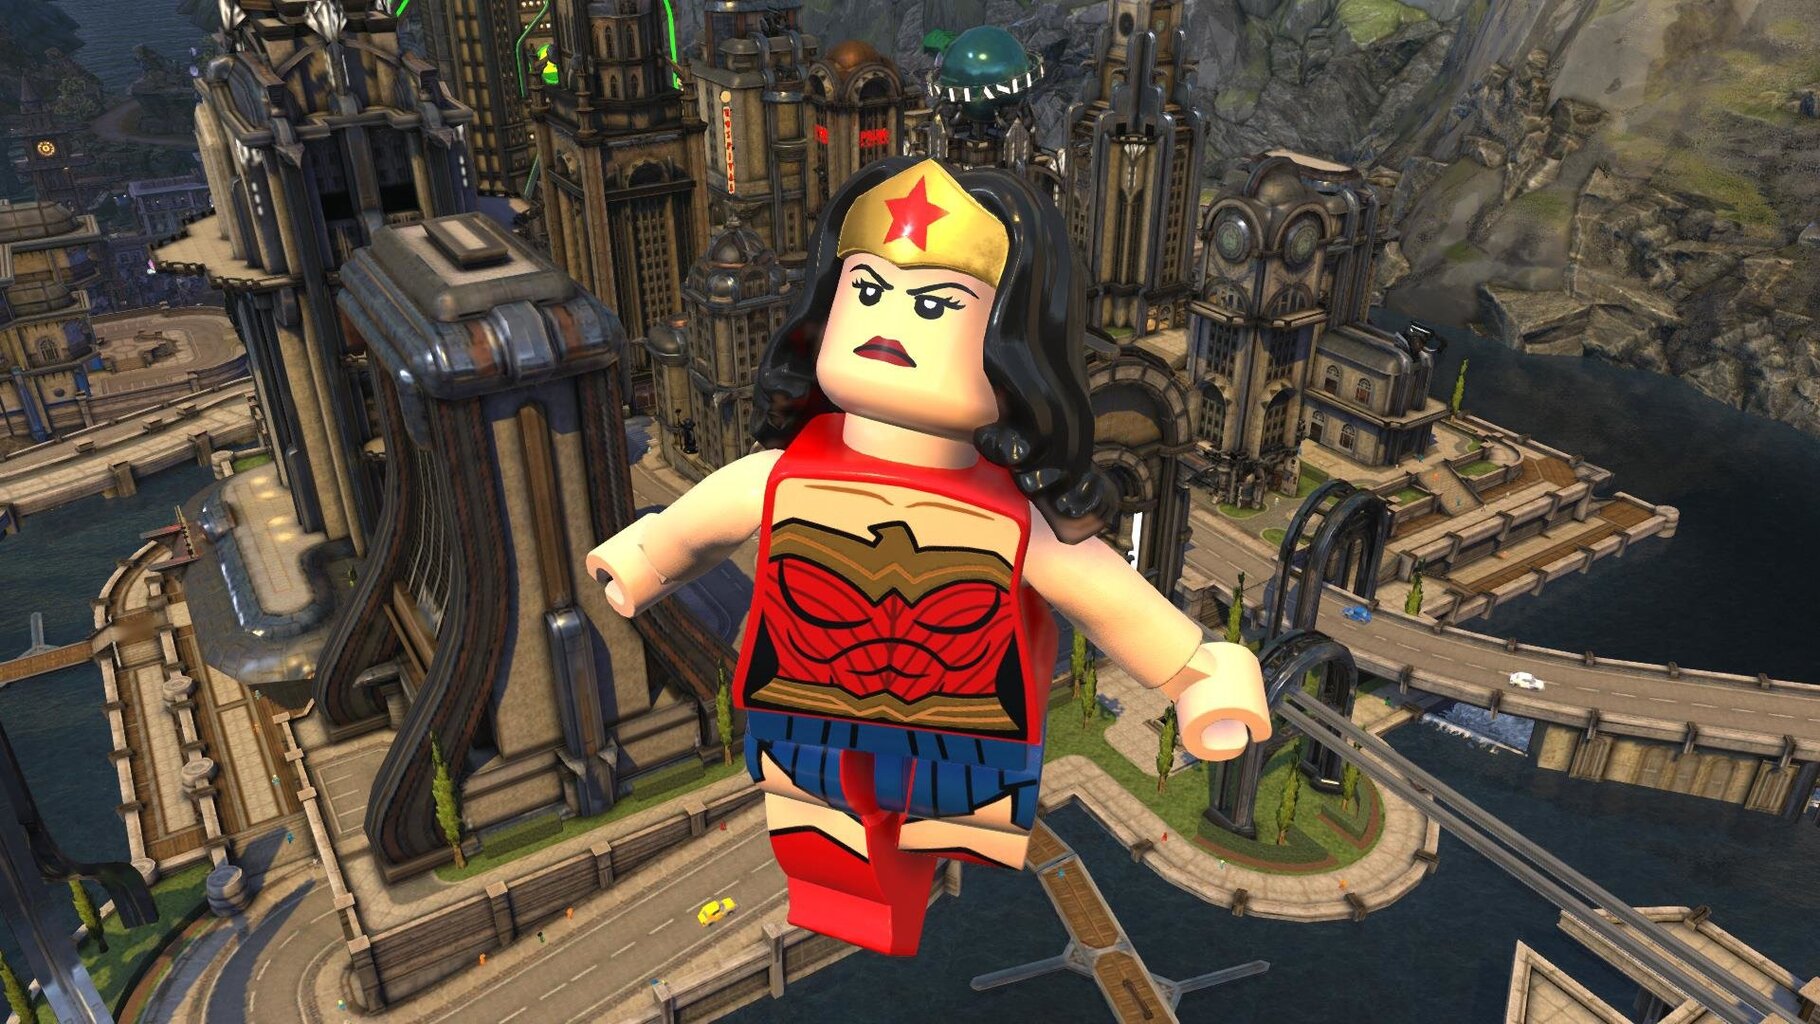 Lego DC Super-Villains Super, Xbox One kaina ir informacija | Kompiuteriniai žaidimai | pigu.lt